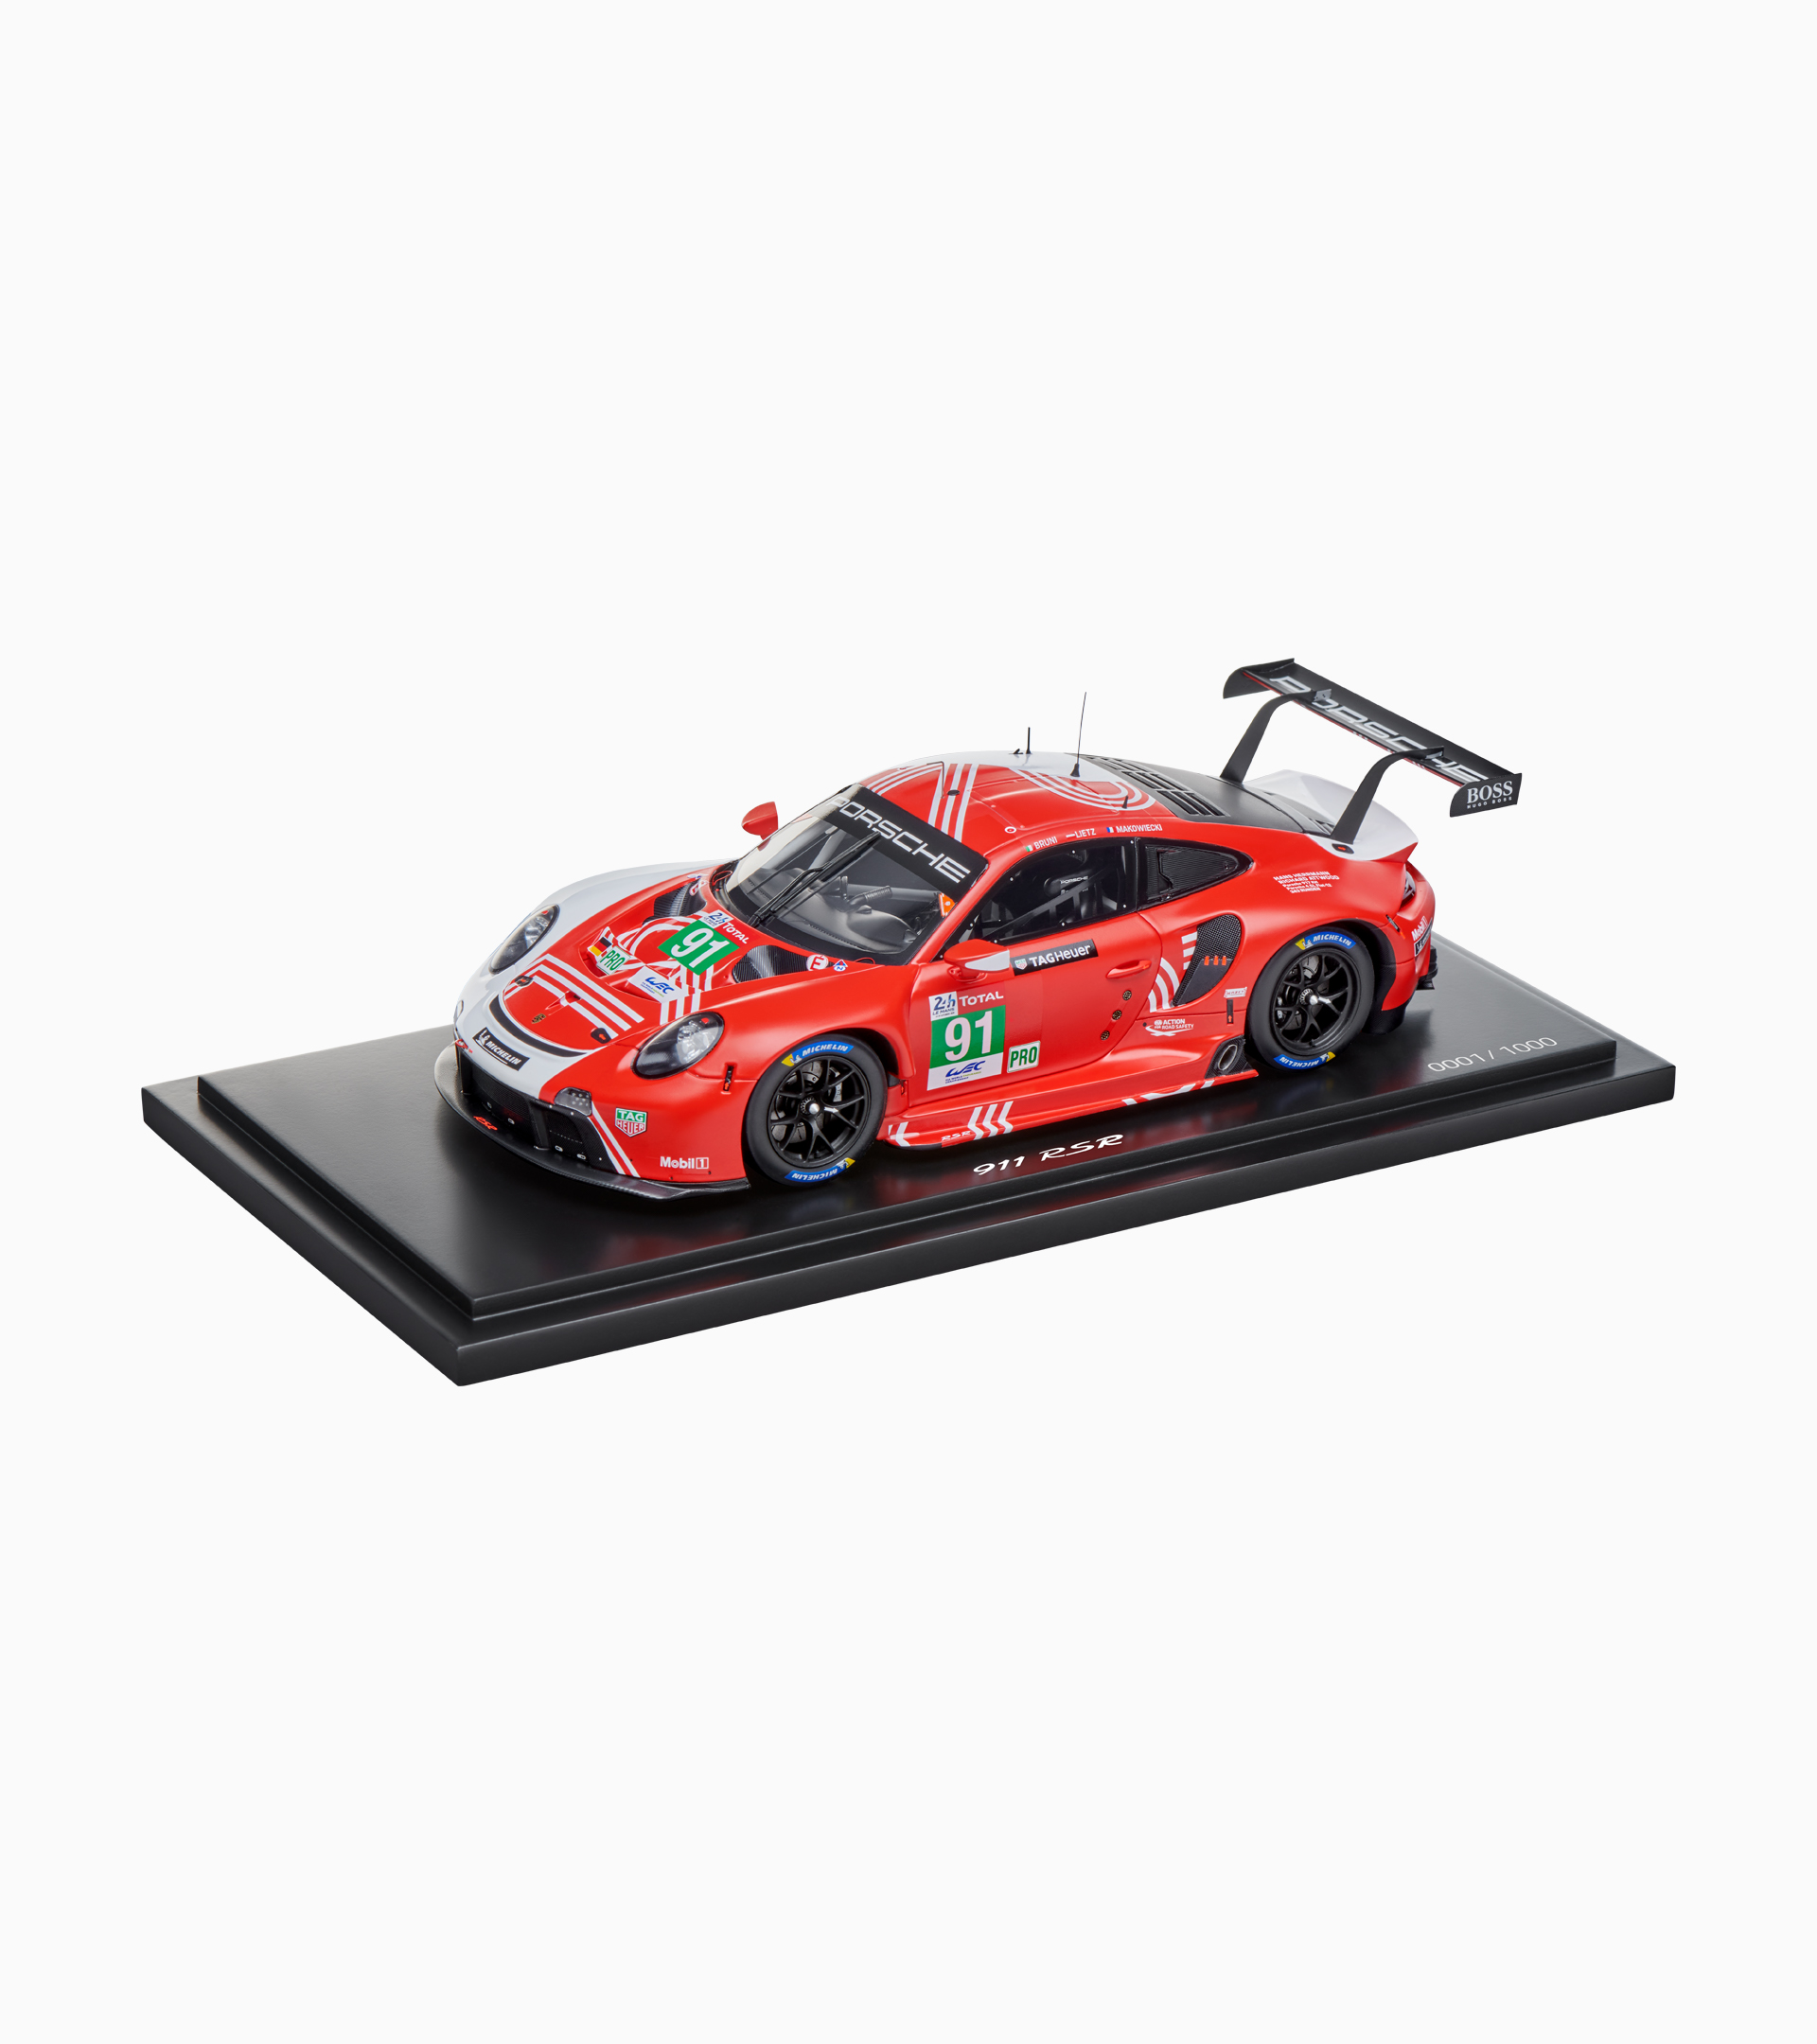 Модель авто 911 RSR, Le Mans 2020 #91, Resin, 1:18